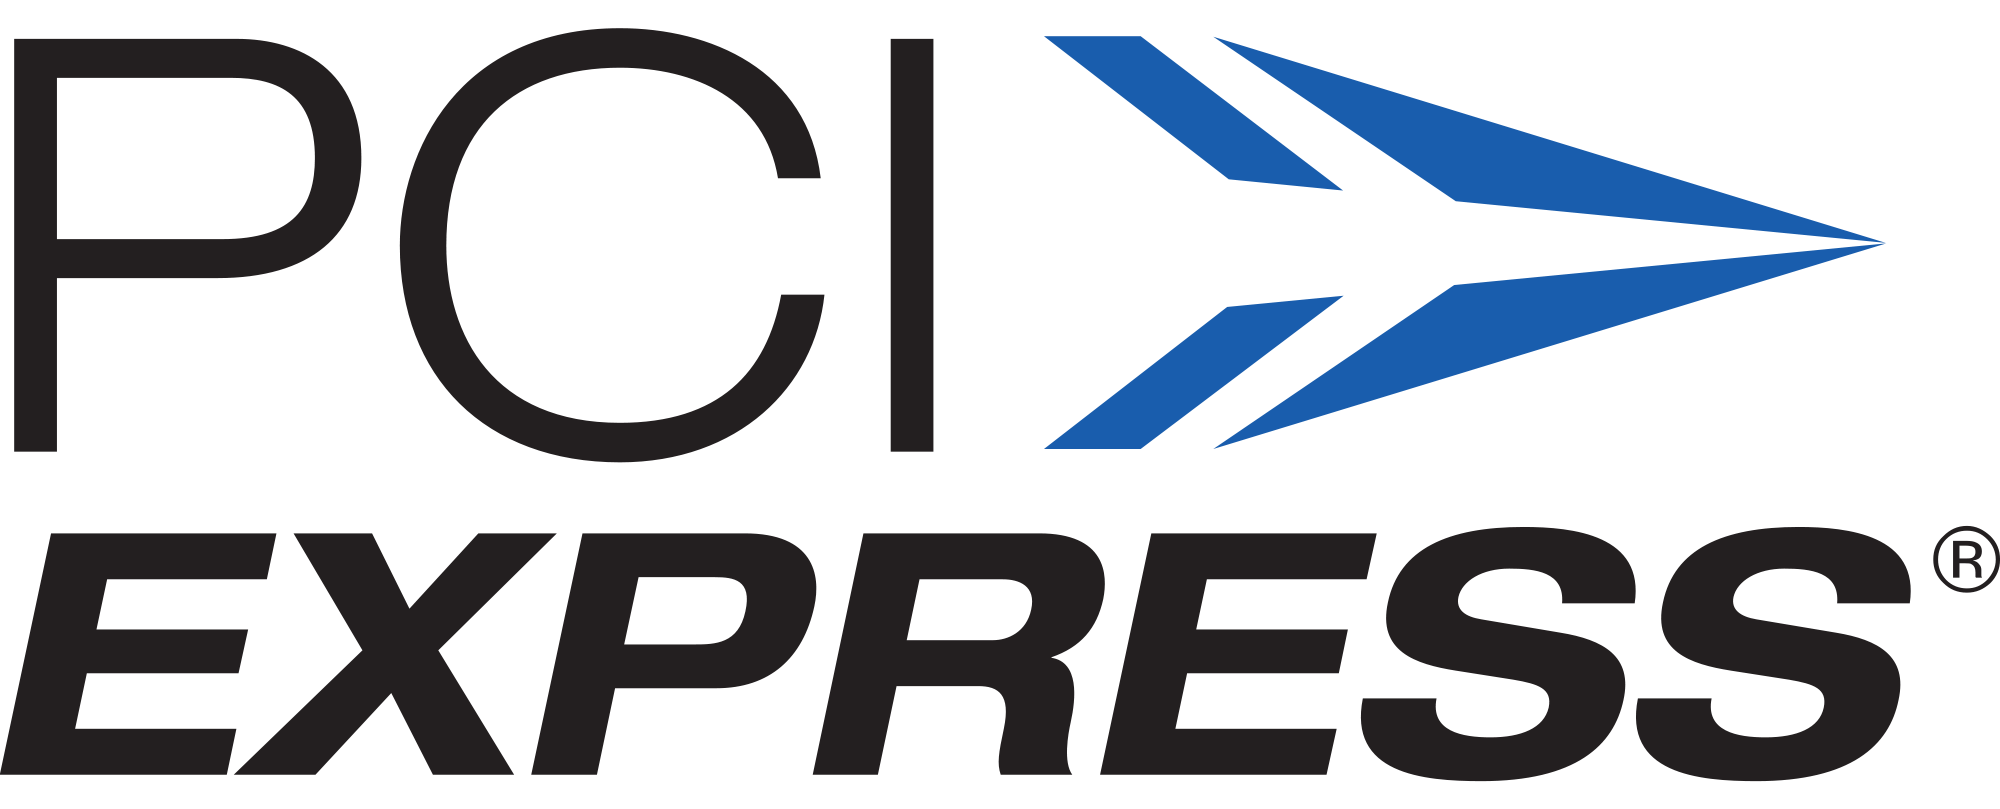 PCIe Logo - PCI Express.svg